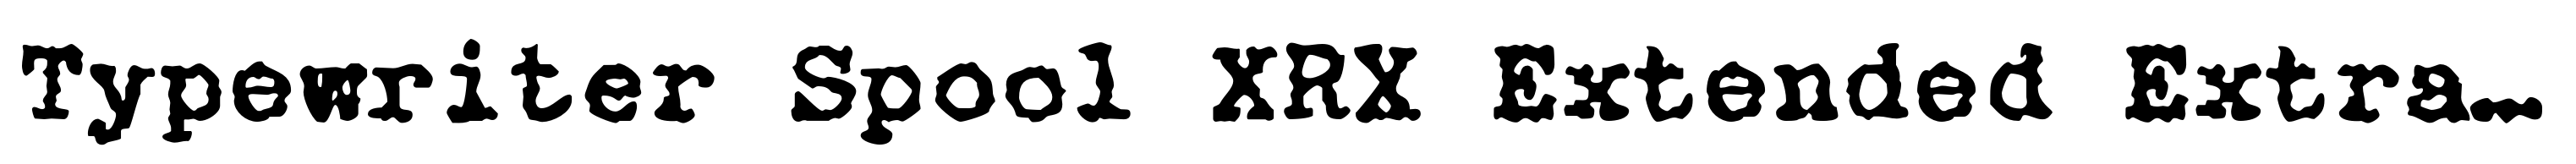 Typewriter Spool XRX Extended Extra Bold